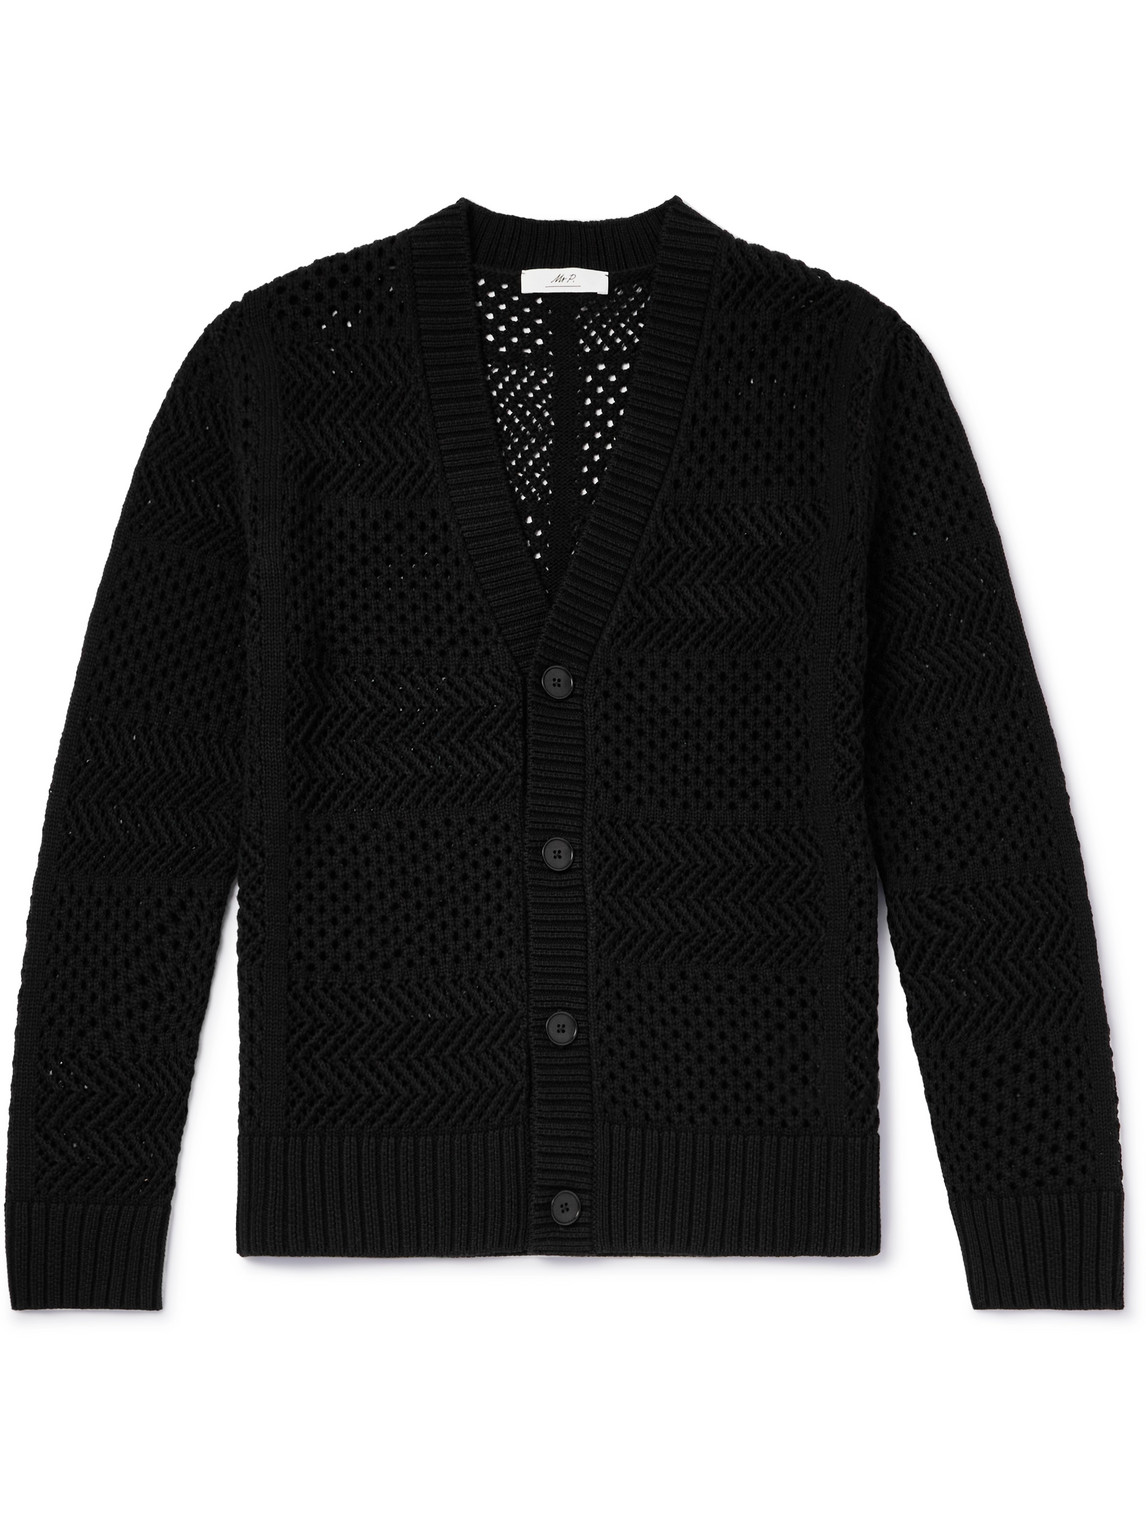 Mr P Open-knit Cotton Cardigan In Black